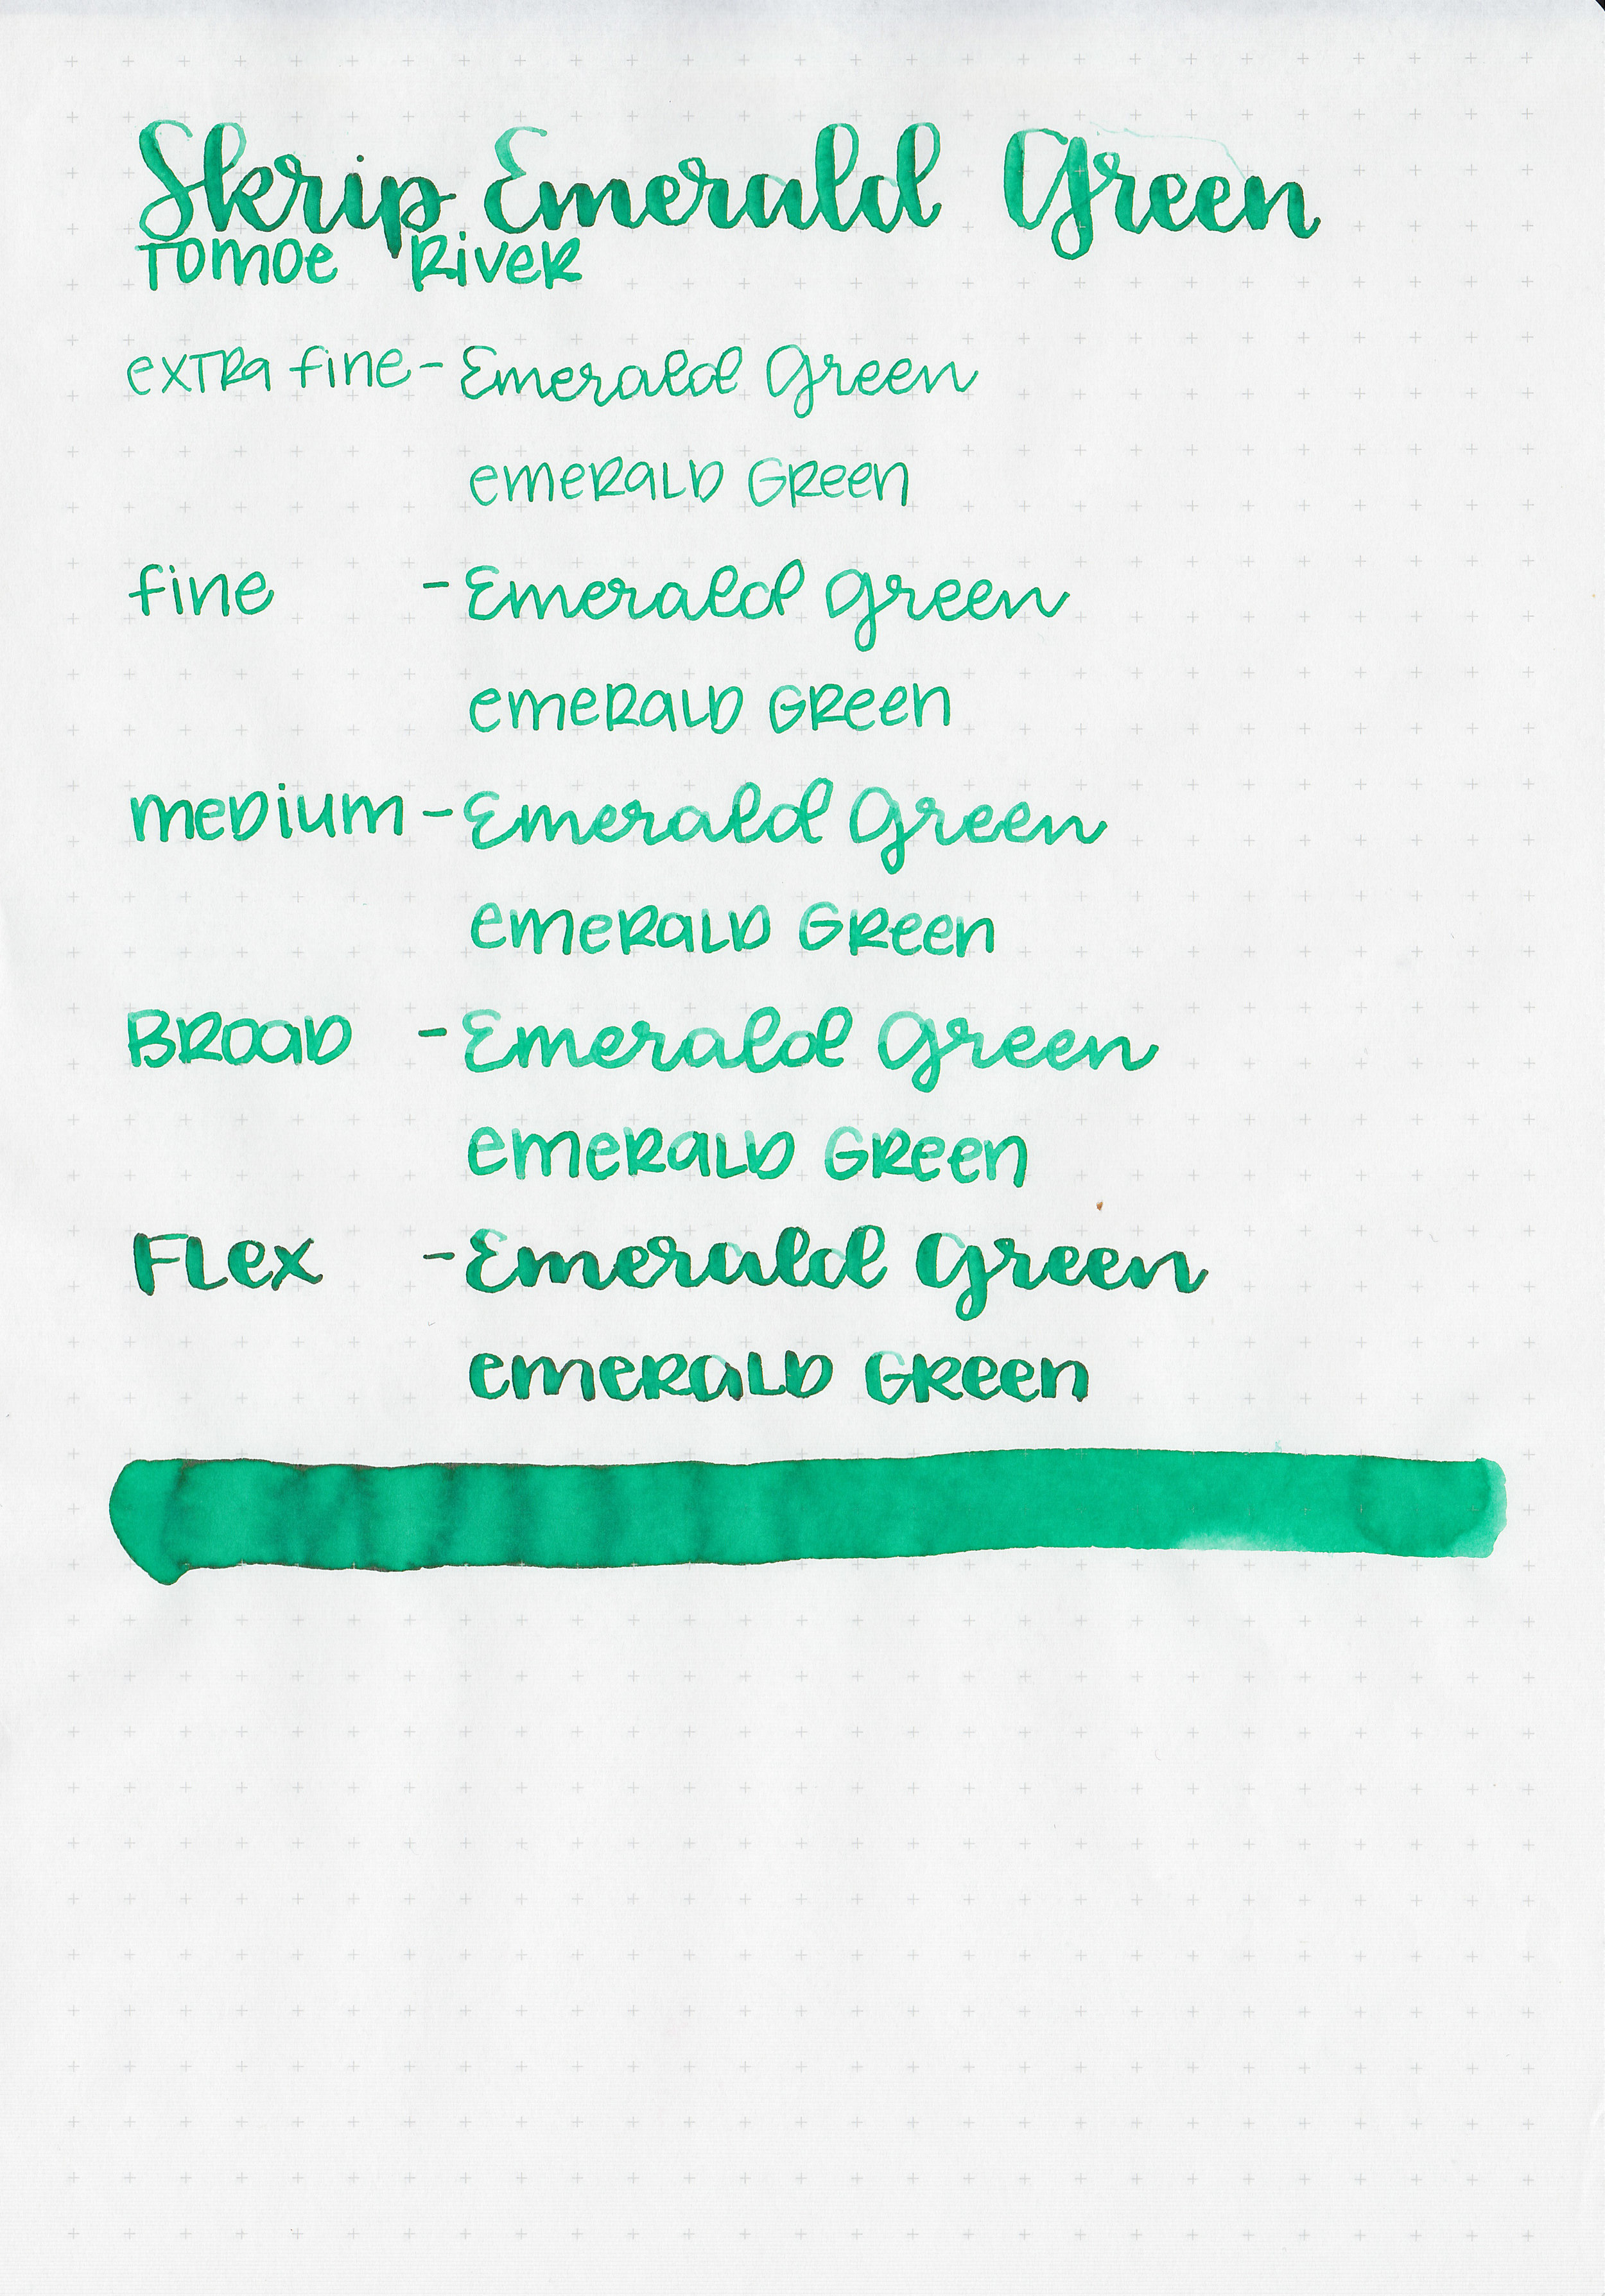 skr-emerald-green-11.jpg